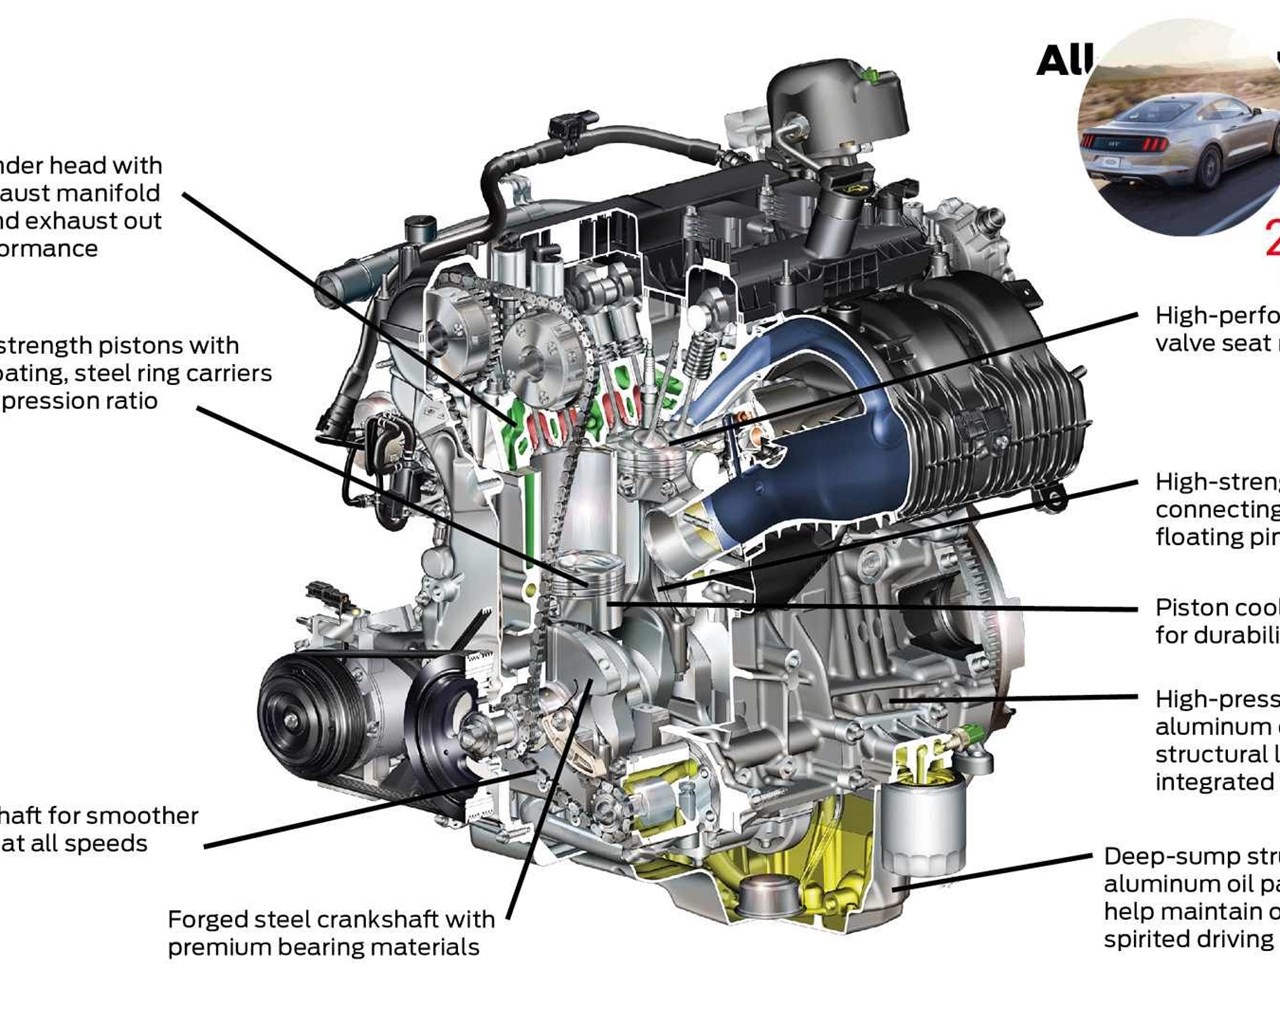 Download 2015 Ford Mustang GT 2.3 EcoBoost Engine Fullscreen Standart 5:4 1...